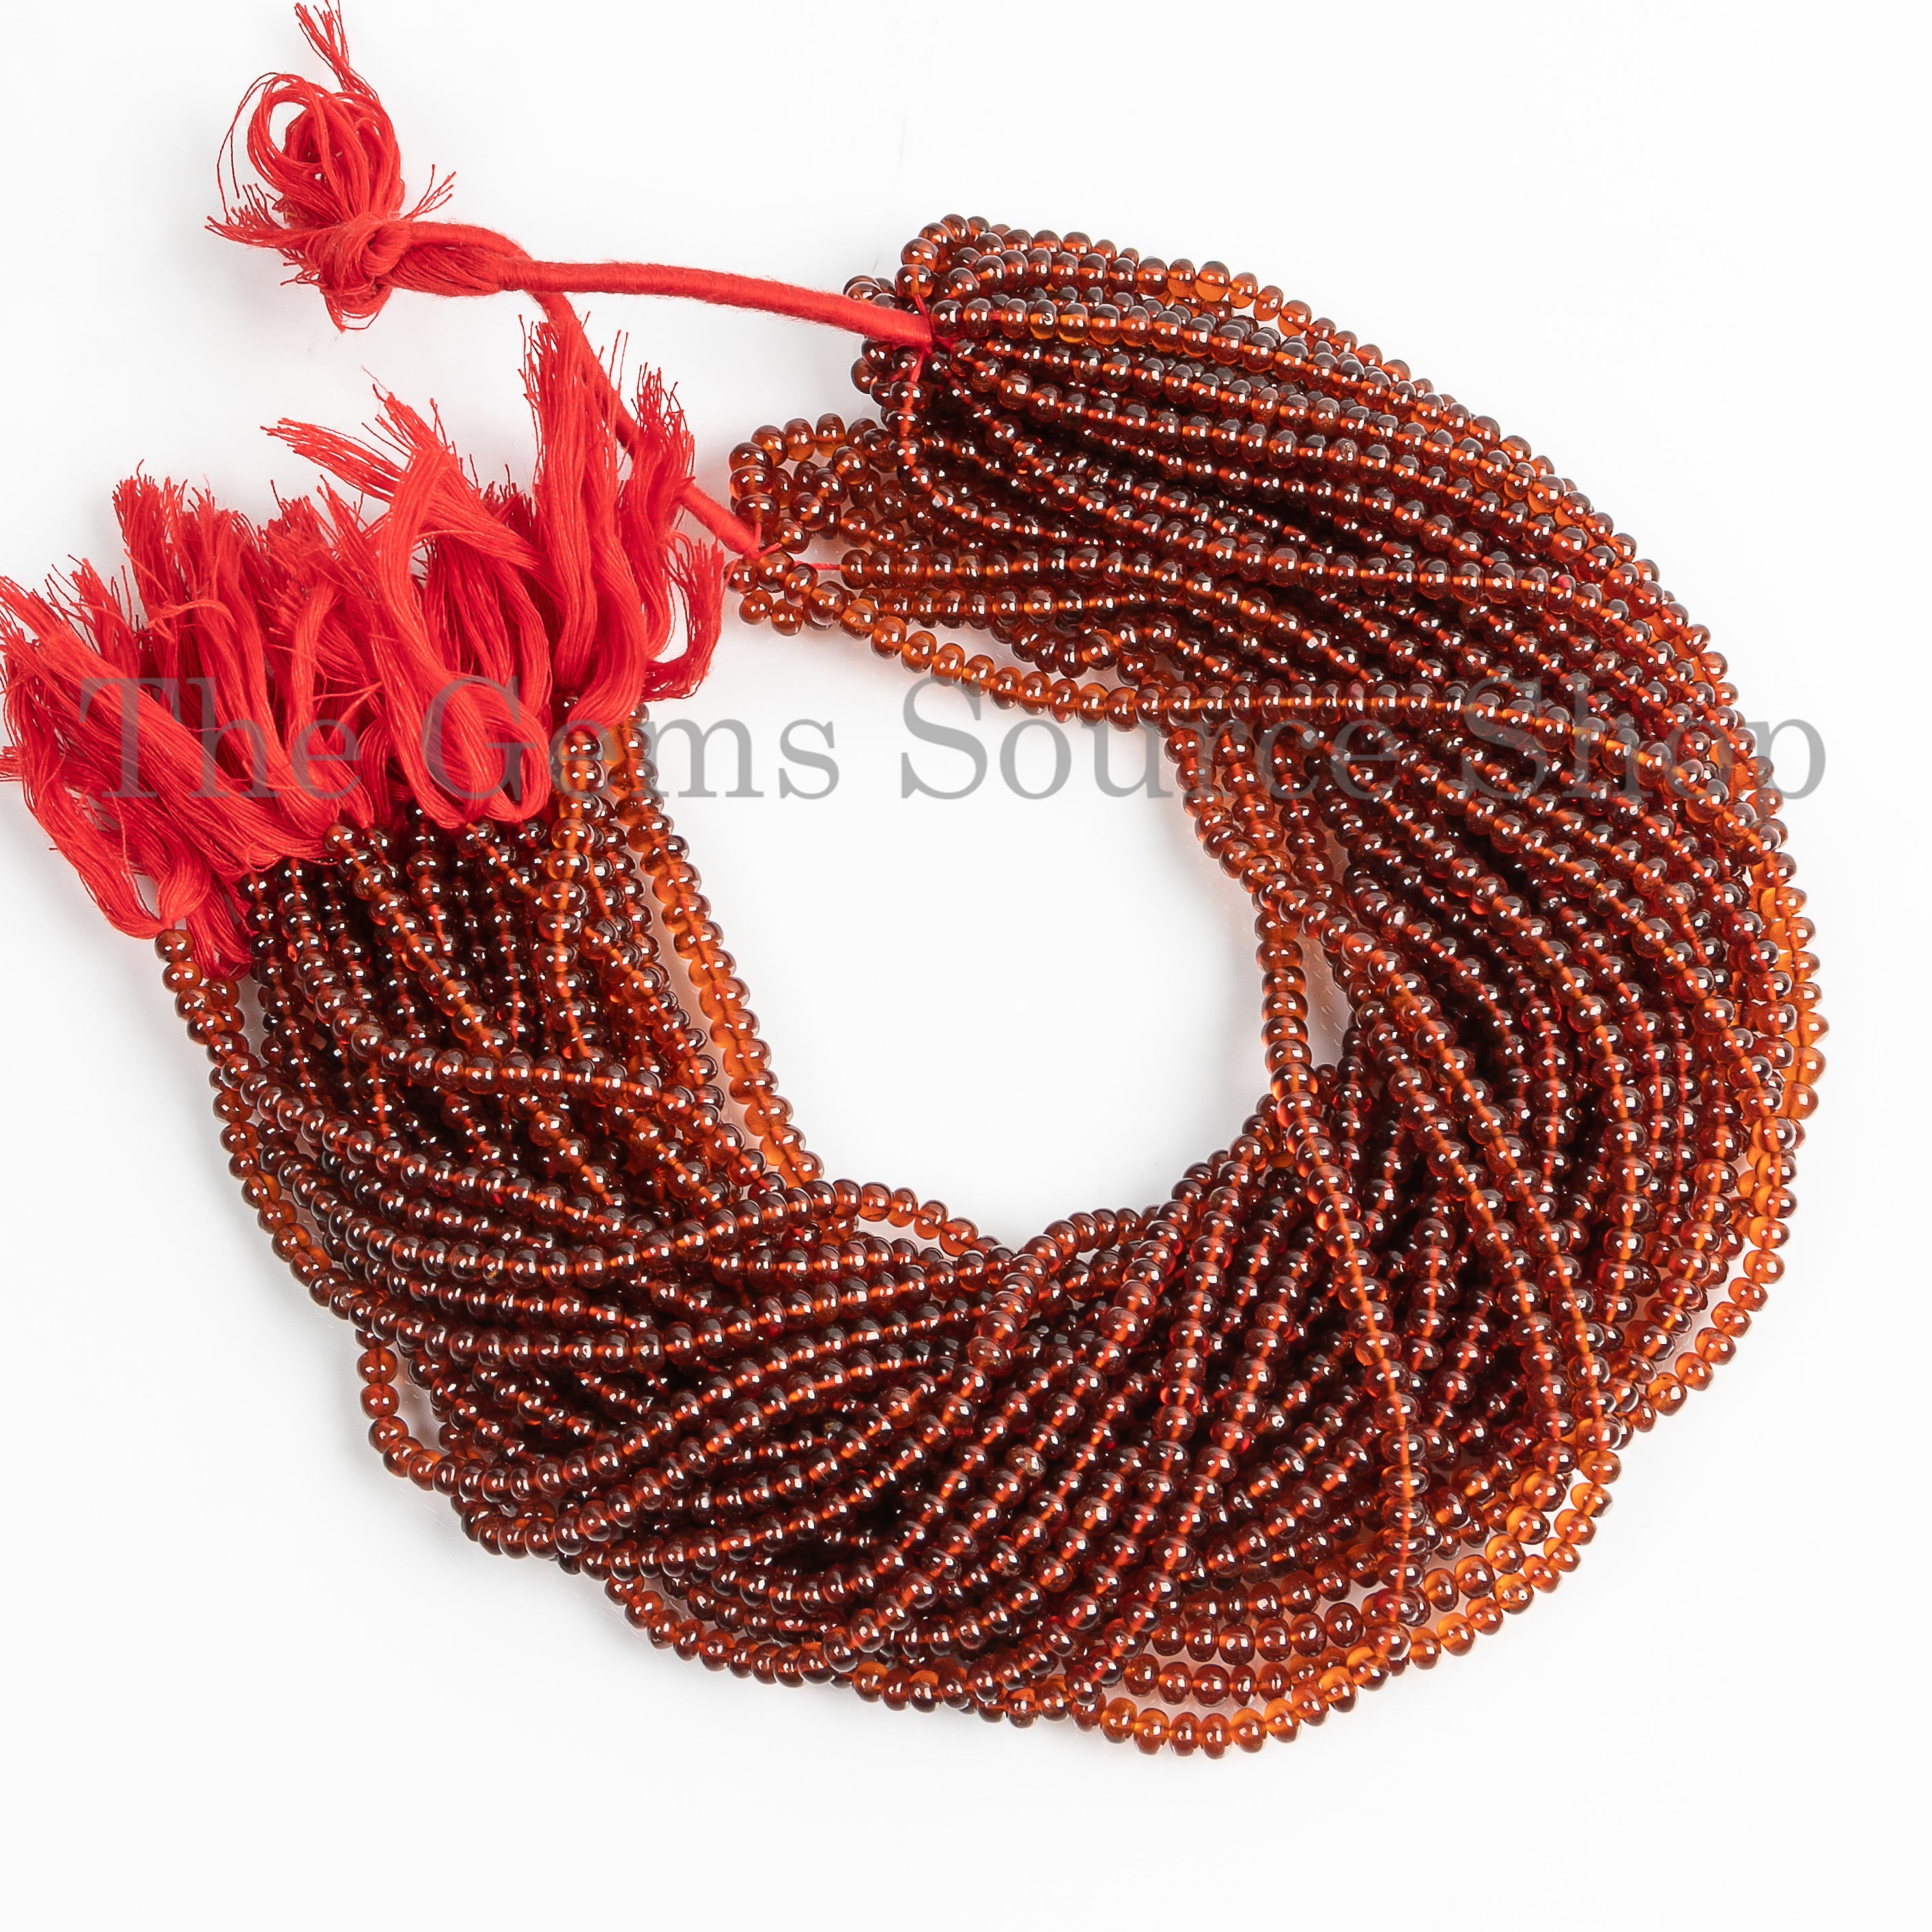 Natural Hessonite Garnet Beads, Garnet Smooth Rondelle Beads